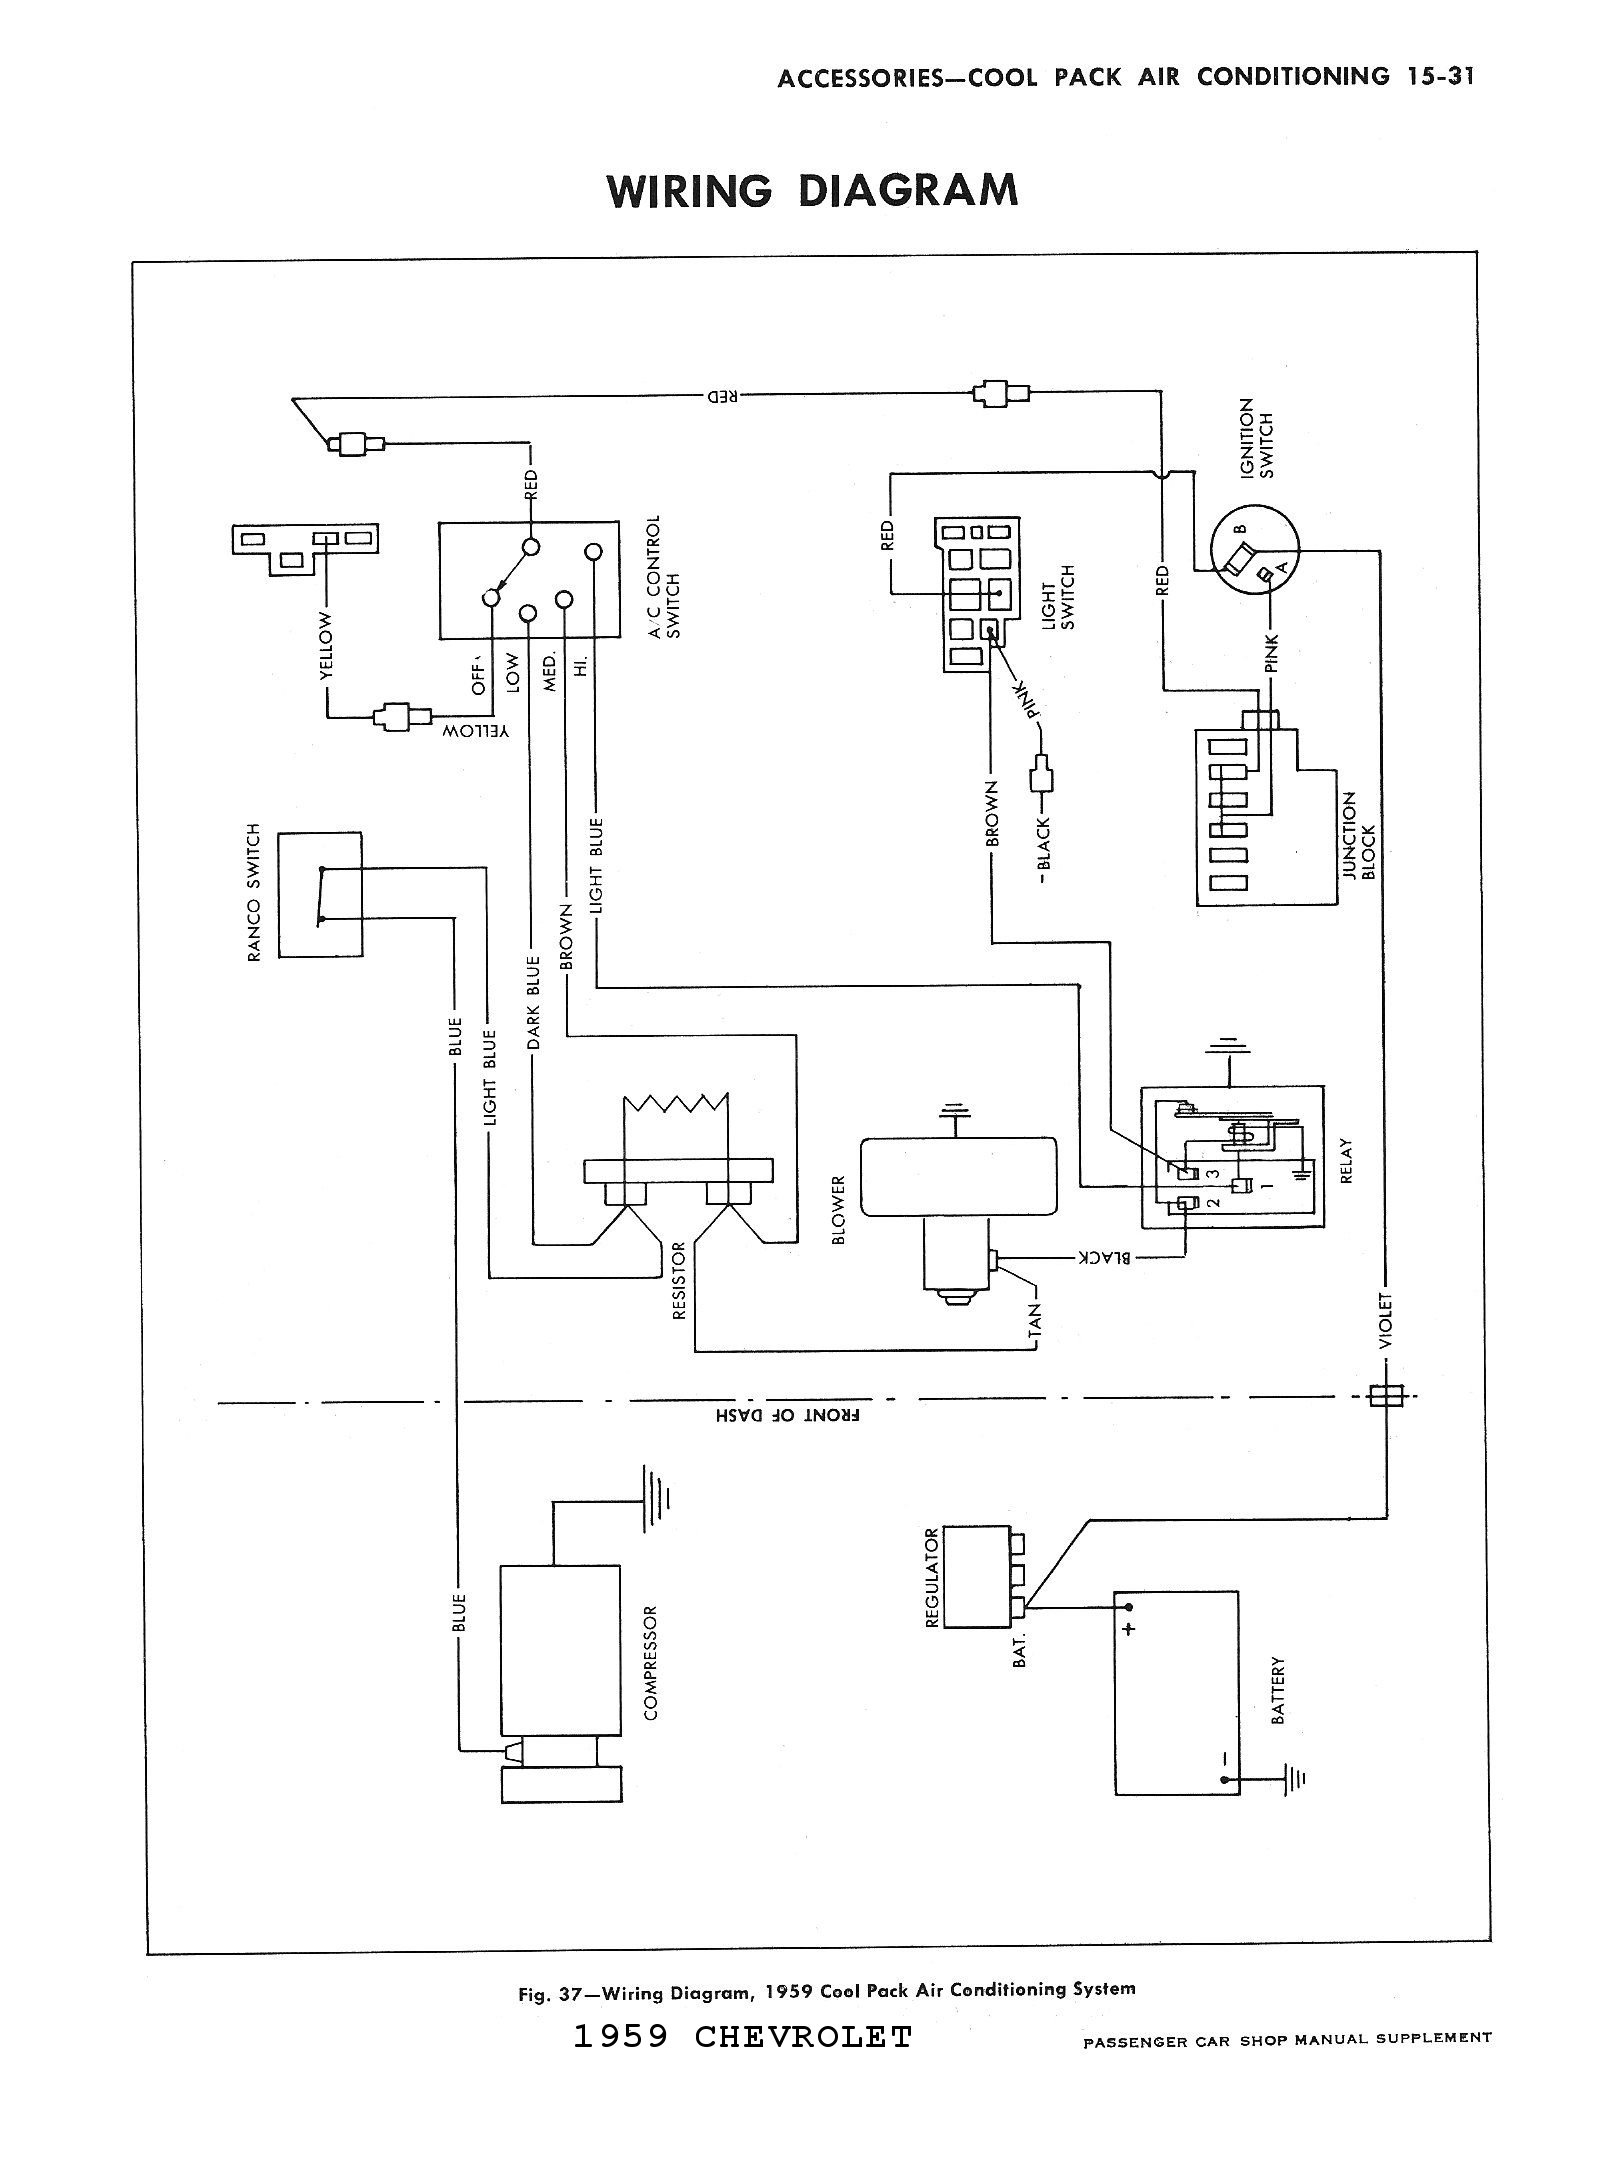 Diagram Turbo 400 Transmission Wiring Diagram Full Version Hd Quality Wiring Diagram Imdiagram Yoursail It